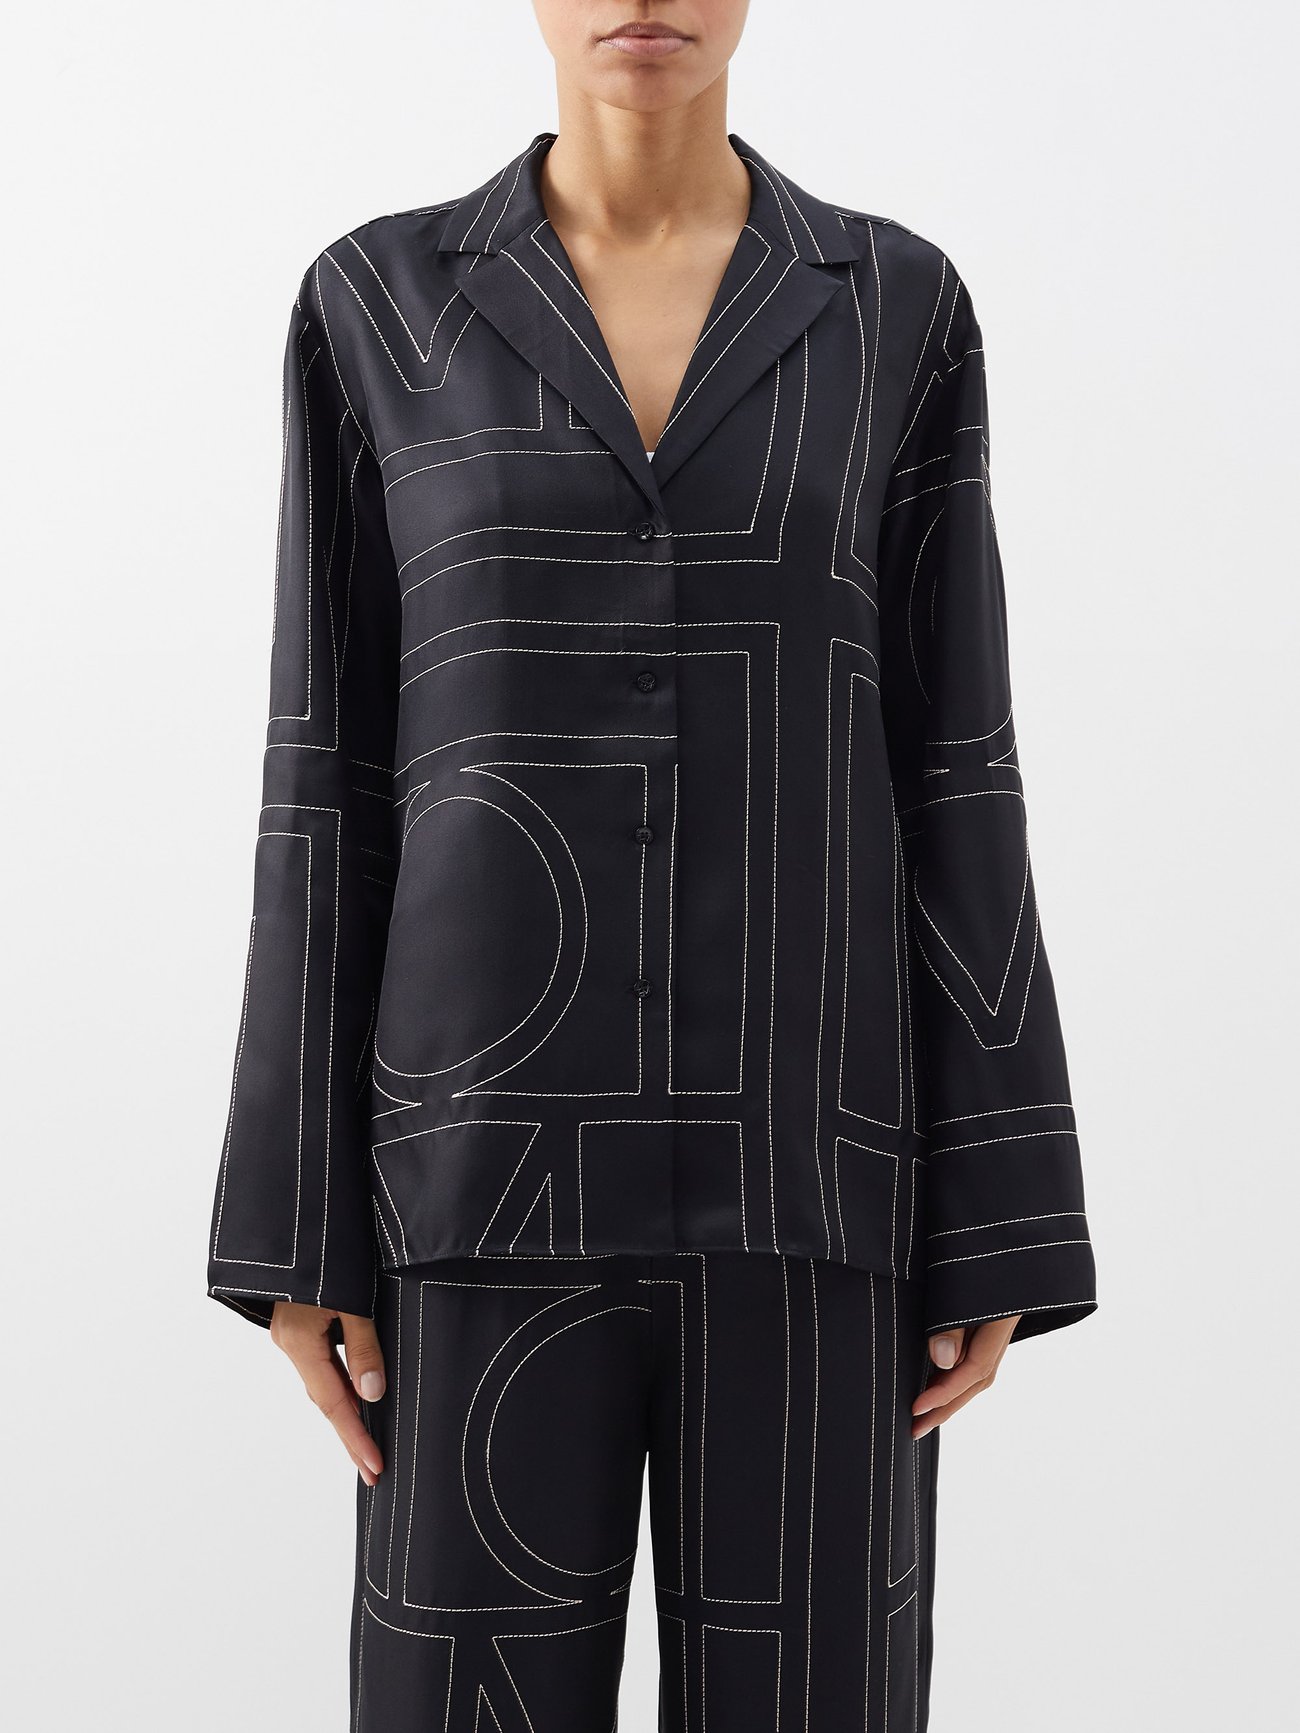 TOTEME - TOTEME Monogram Silk Pajama Top in Mocha 40 / 8 US - Hampden Clothing